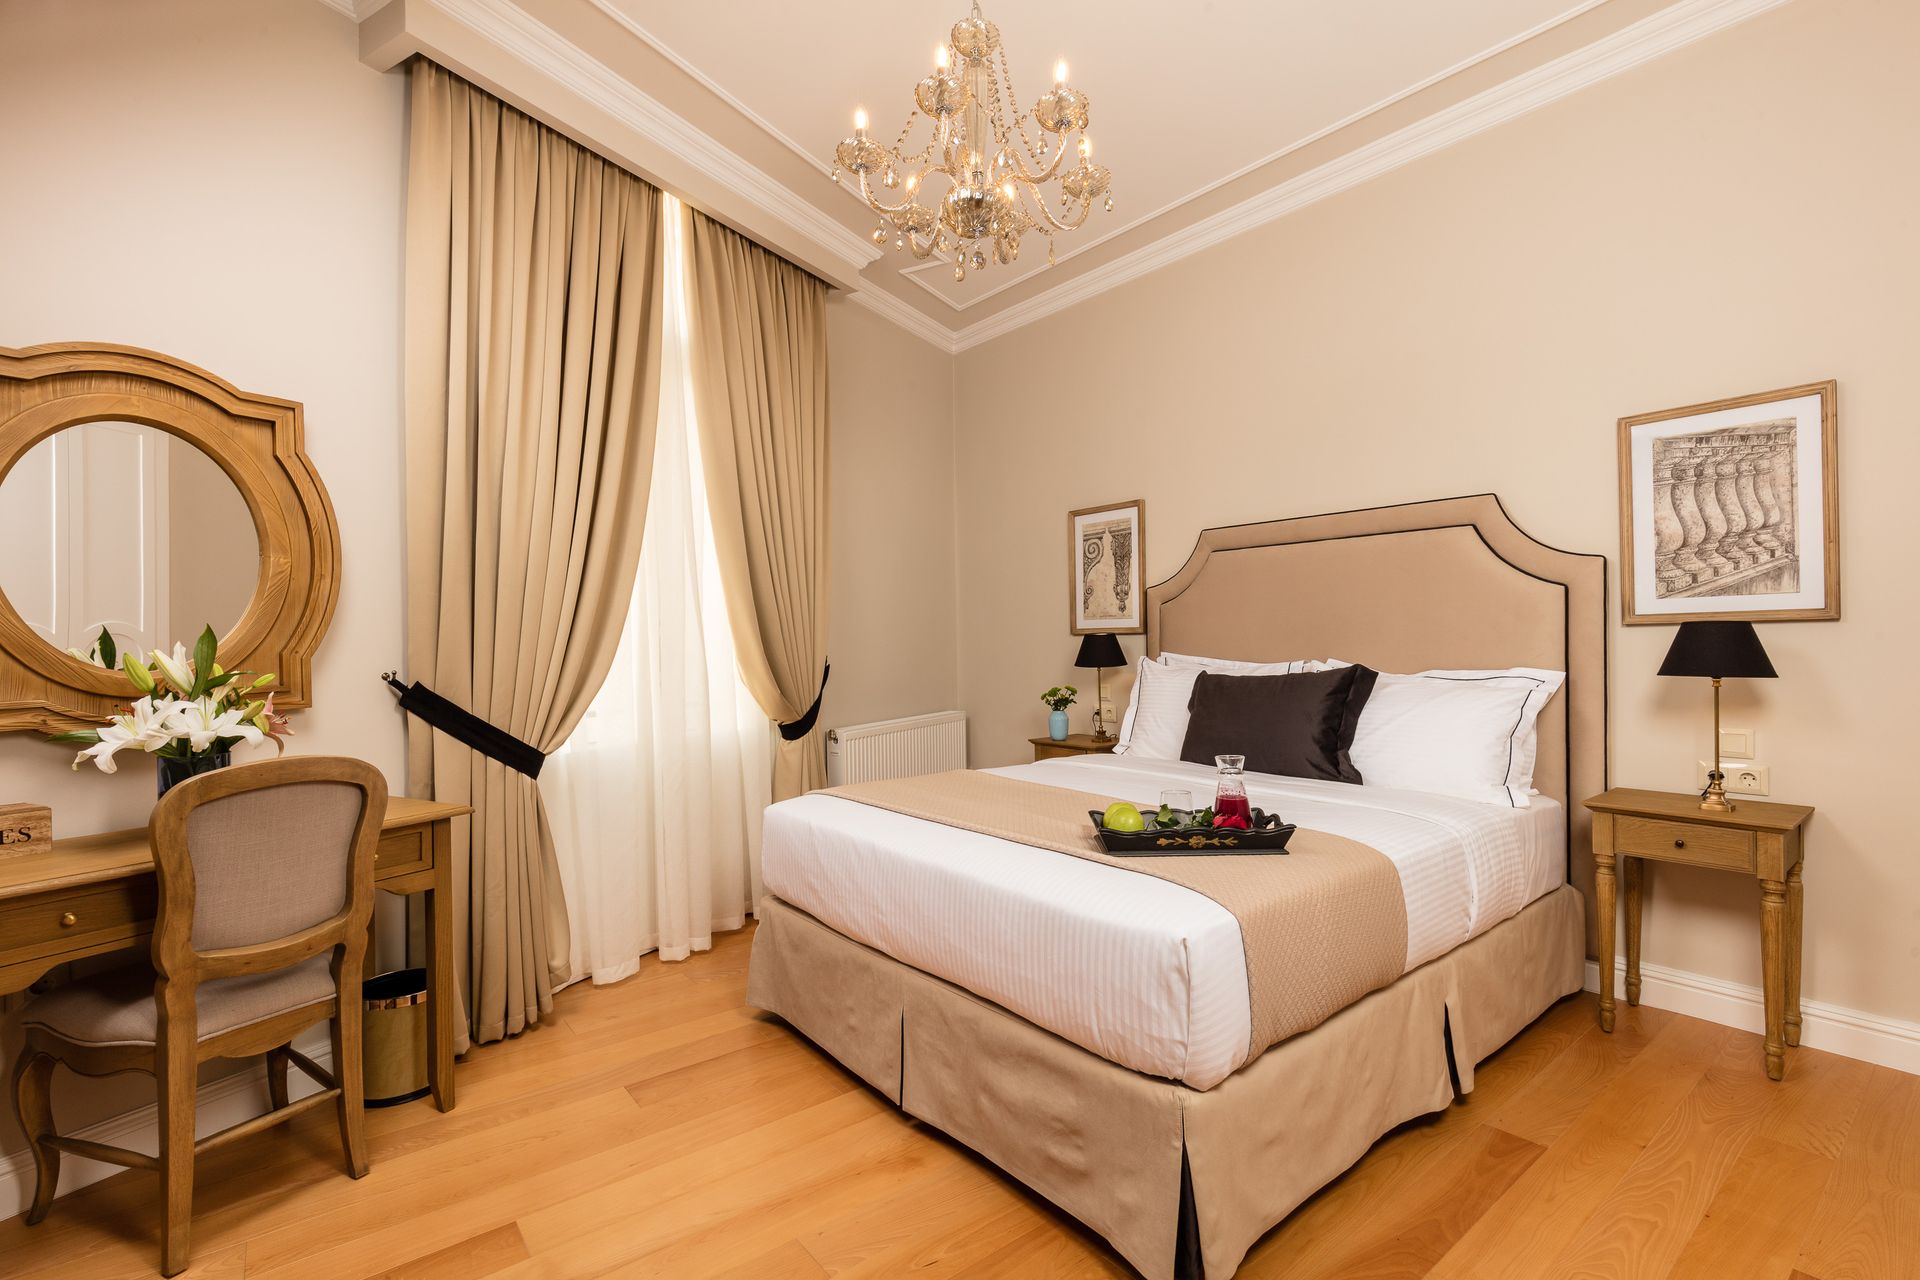 4* Athens Mansion Luxury Suites - Αθήνα ✦ 2 Ημέρες (1 Διανυκτέρευση) ✦ 2 άτομα ✦ Πρωινό ✦ έως 30/09/2022 ✦ Στο κέντρο της Αθήνας!